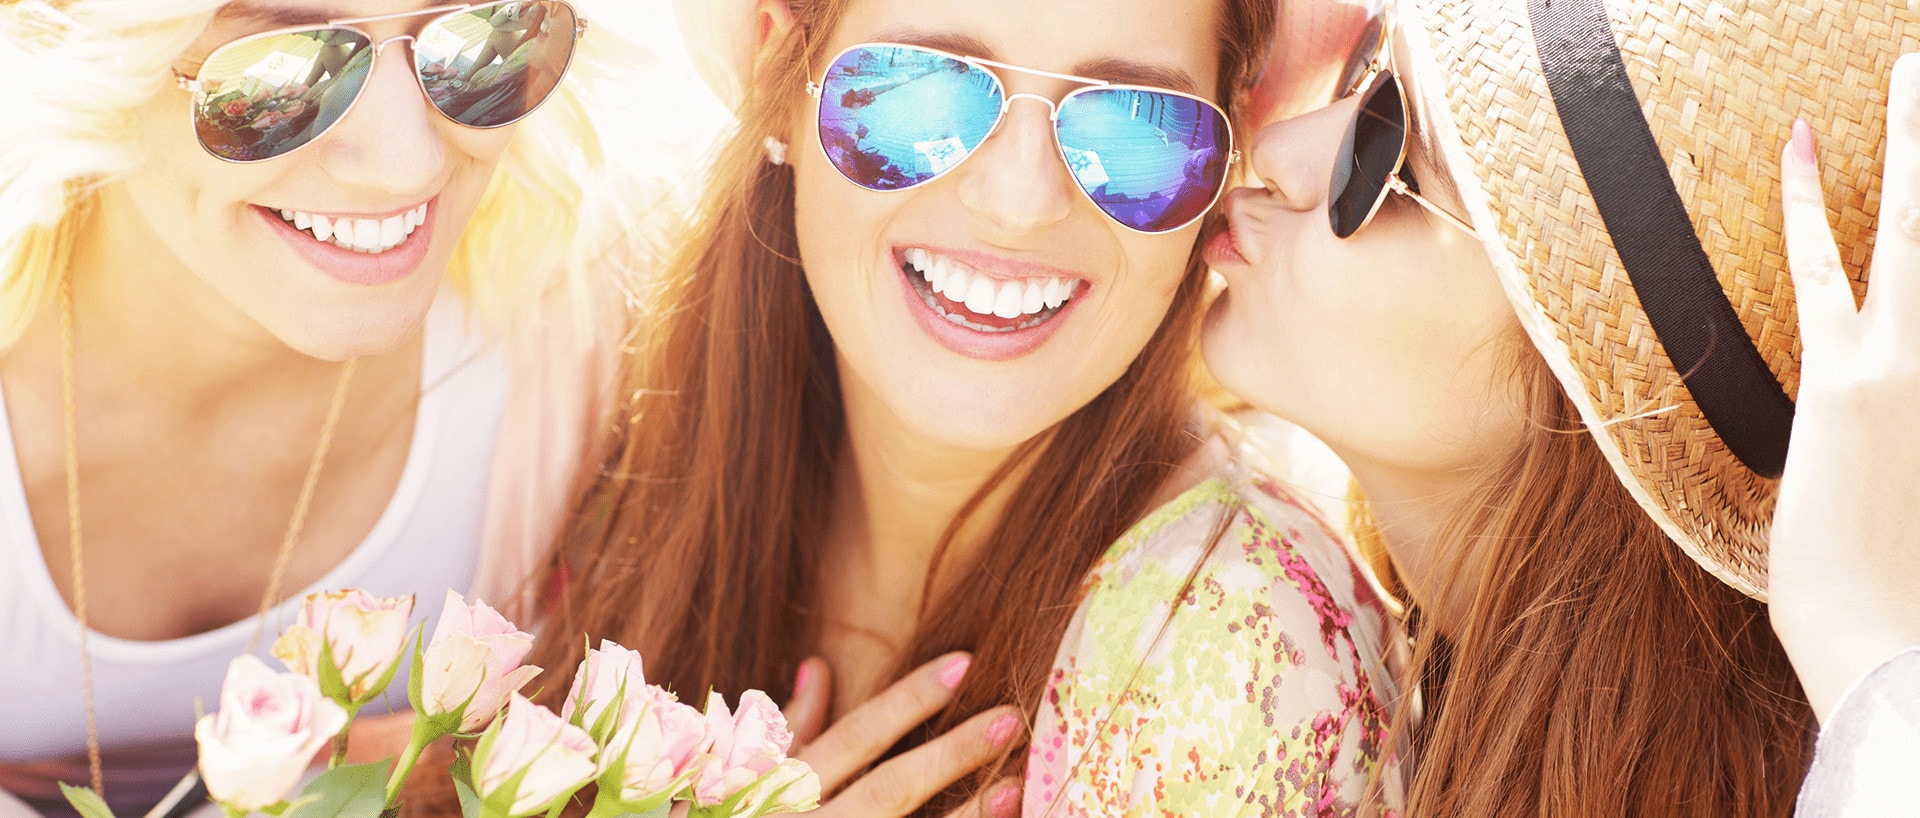 three women in sunglasses give birthday flowers